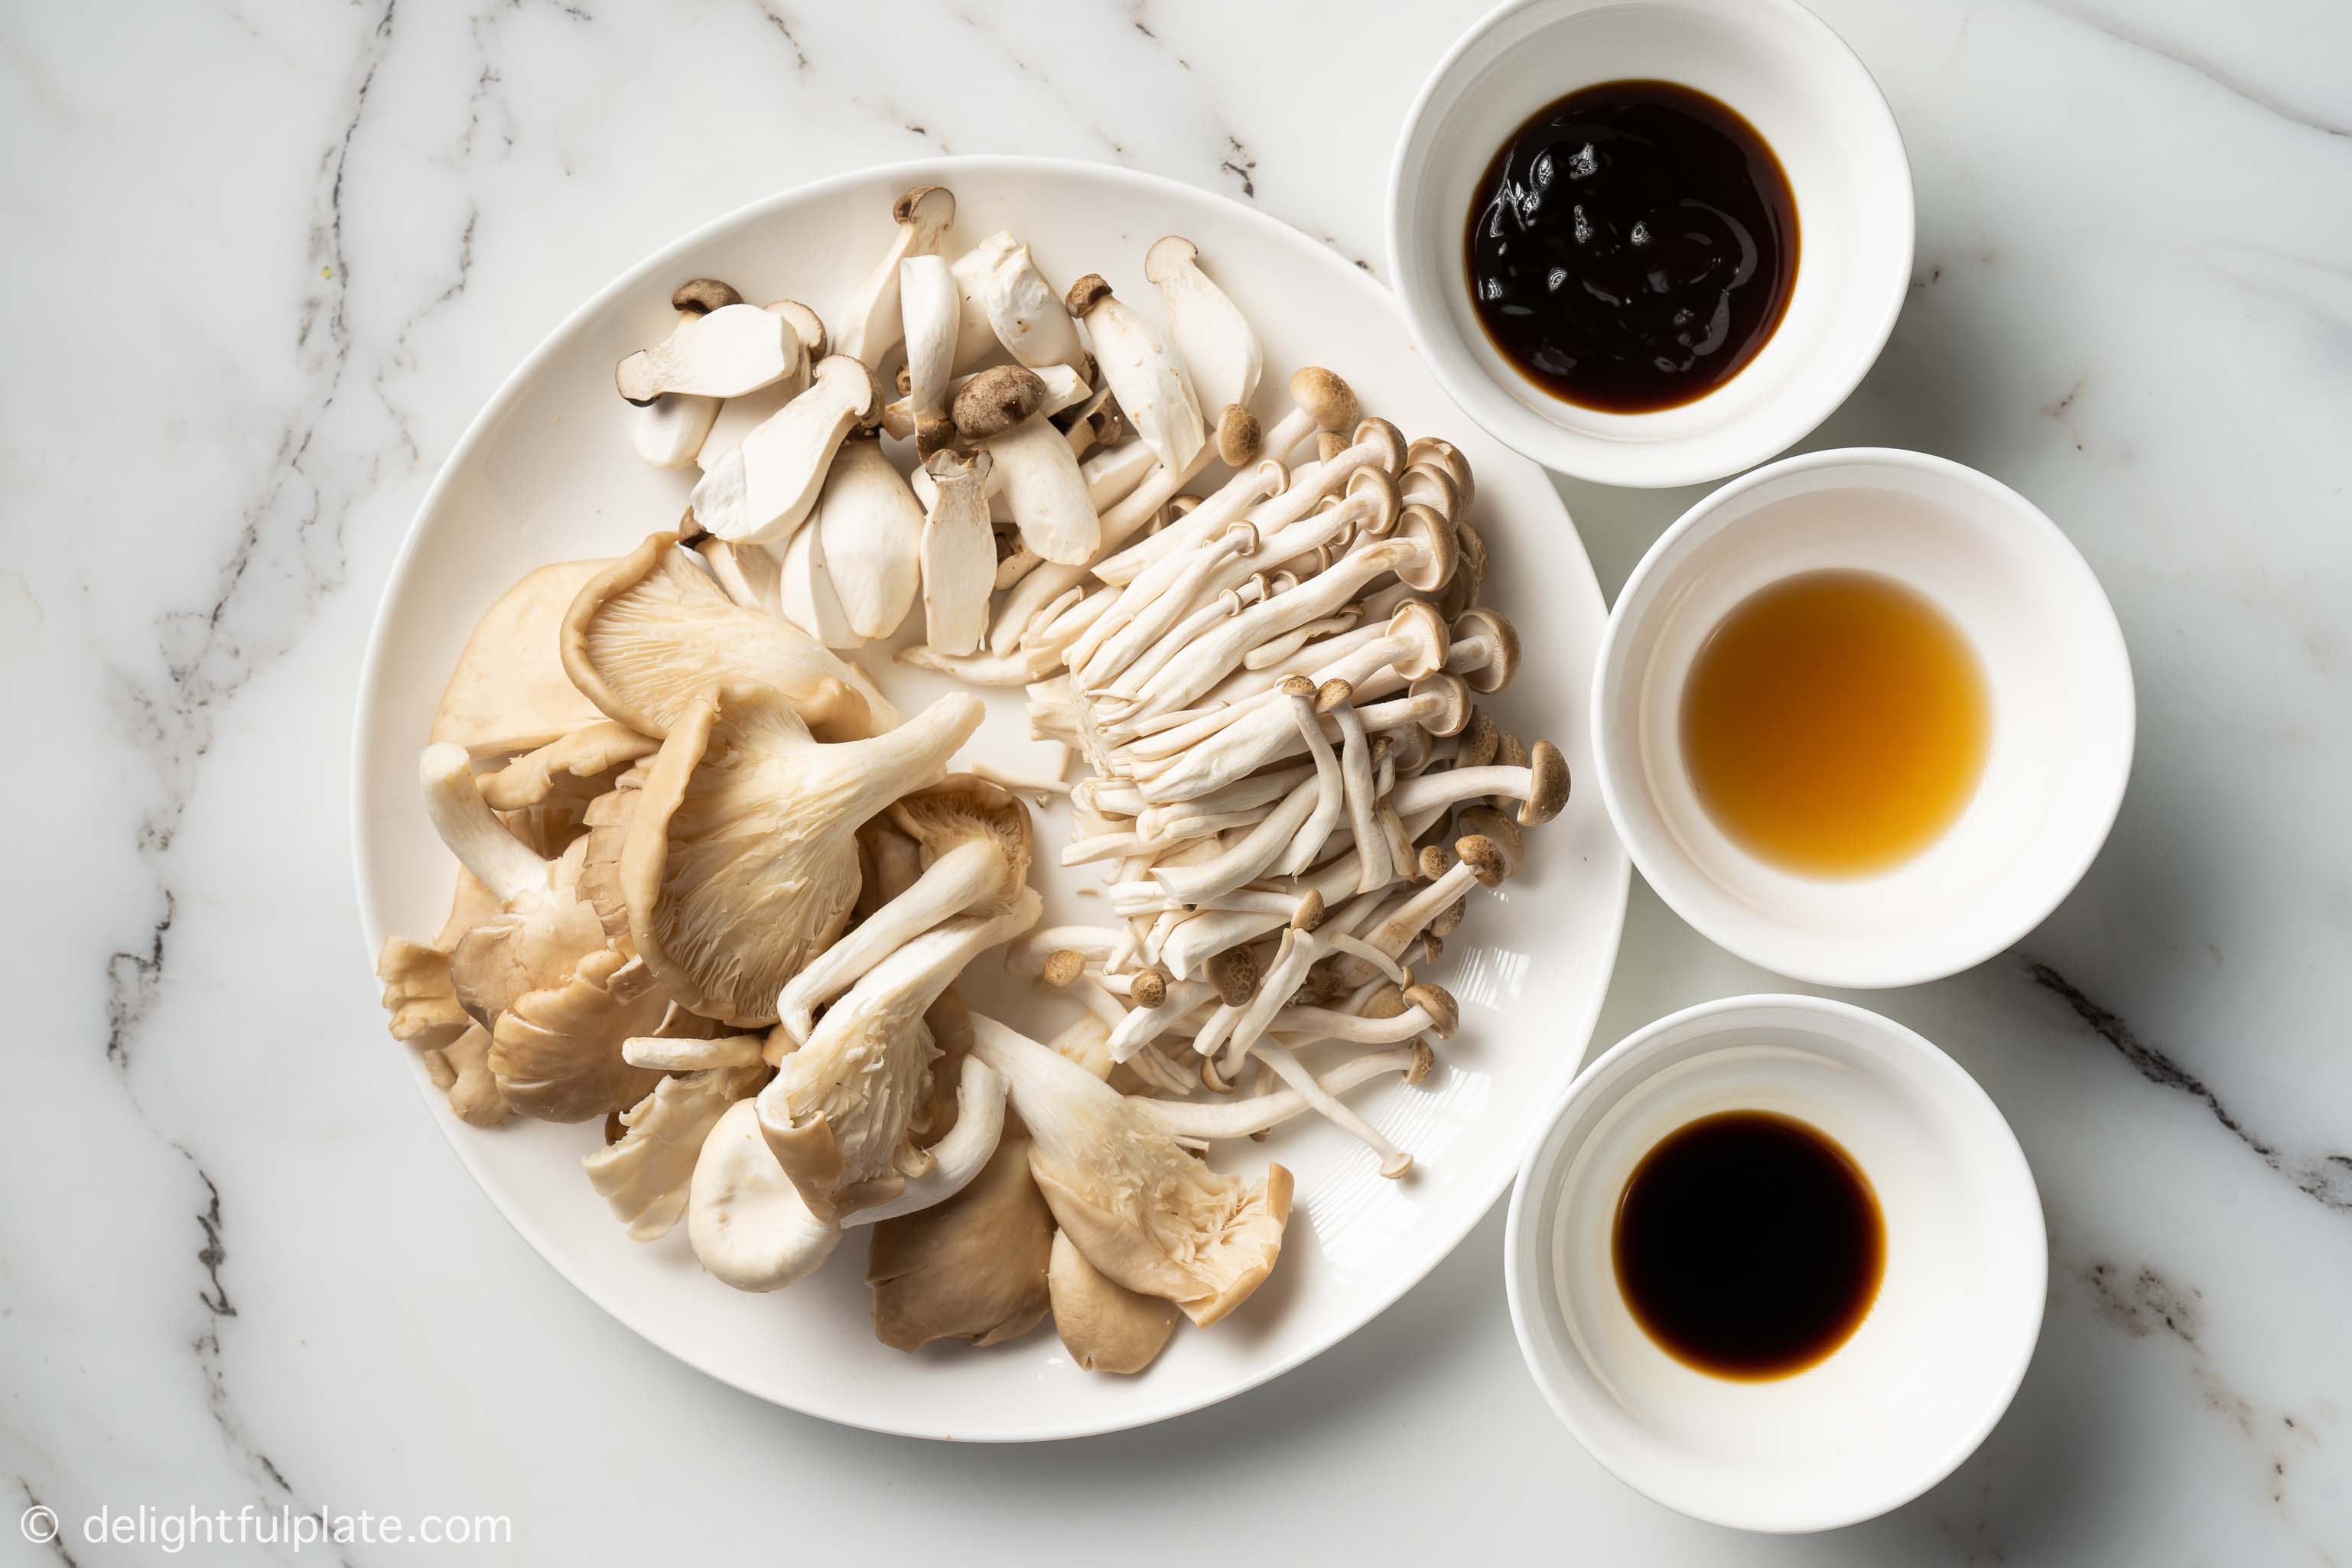 plates containing mushrooms and seasonings